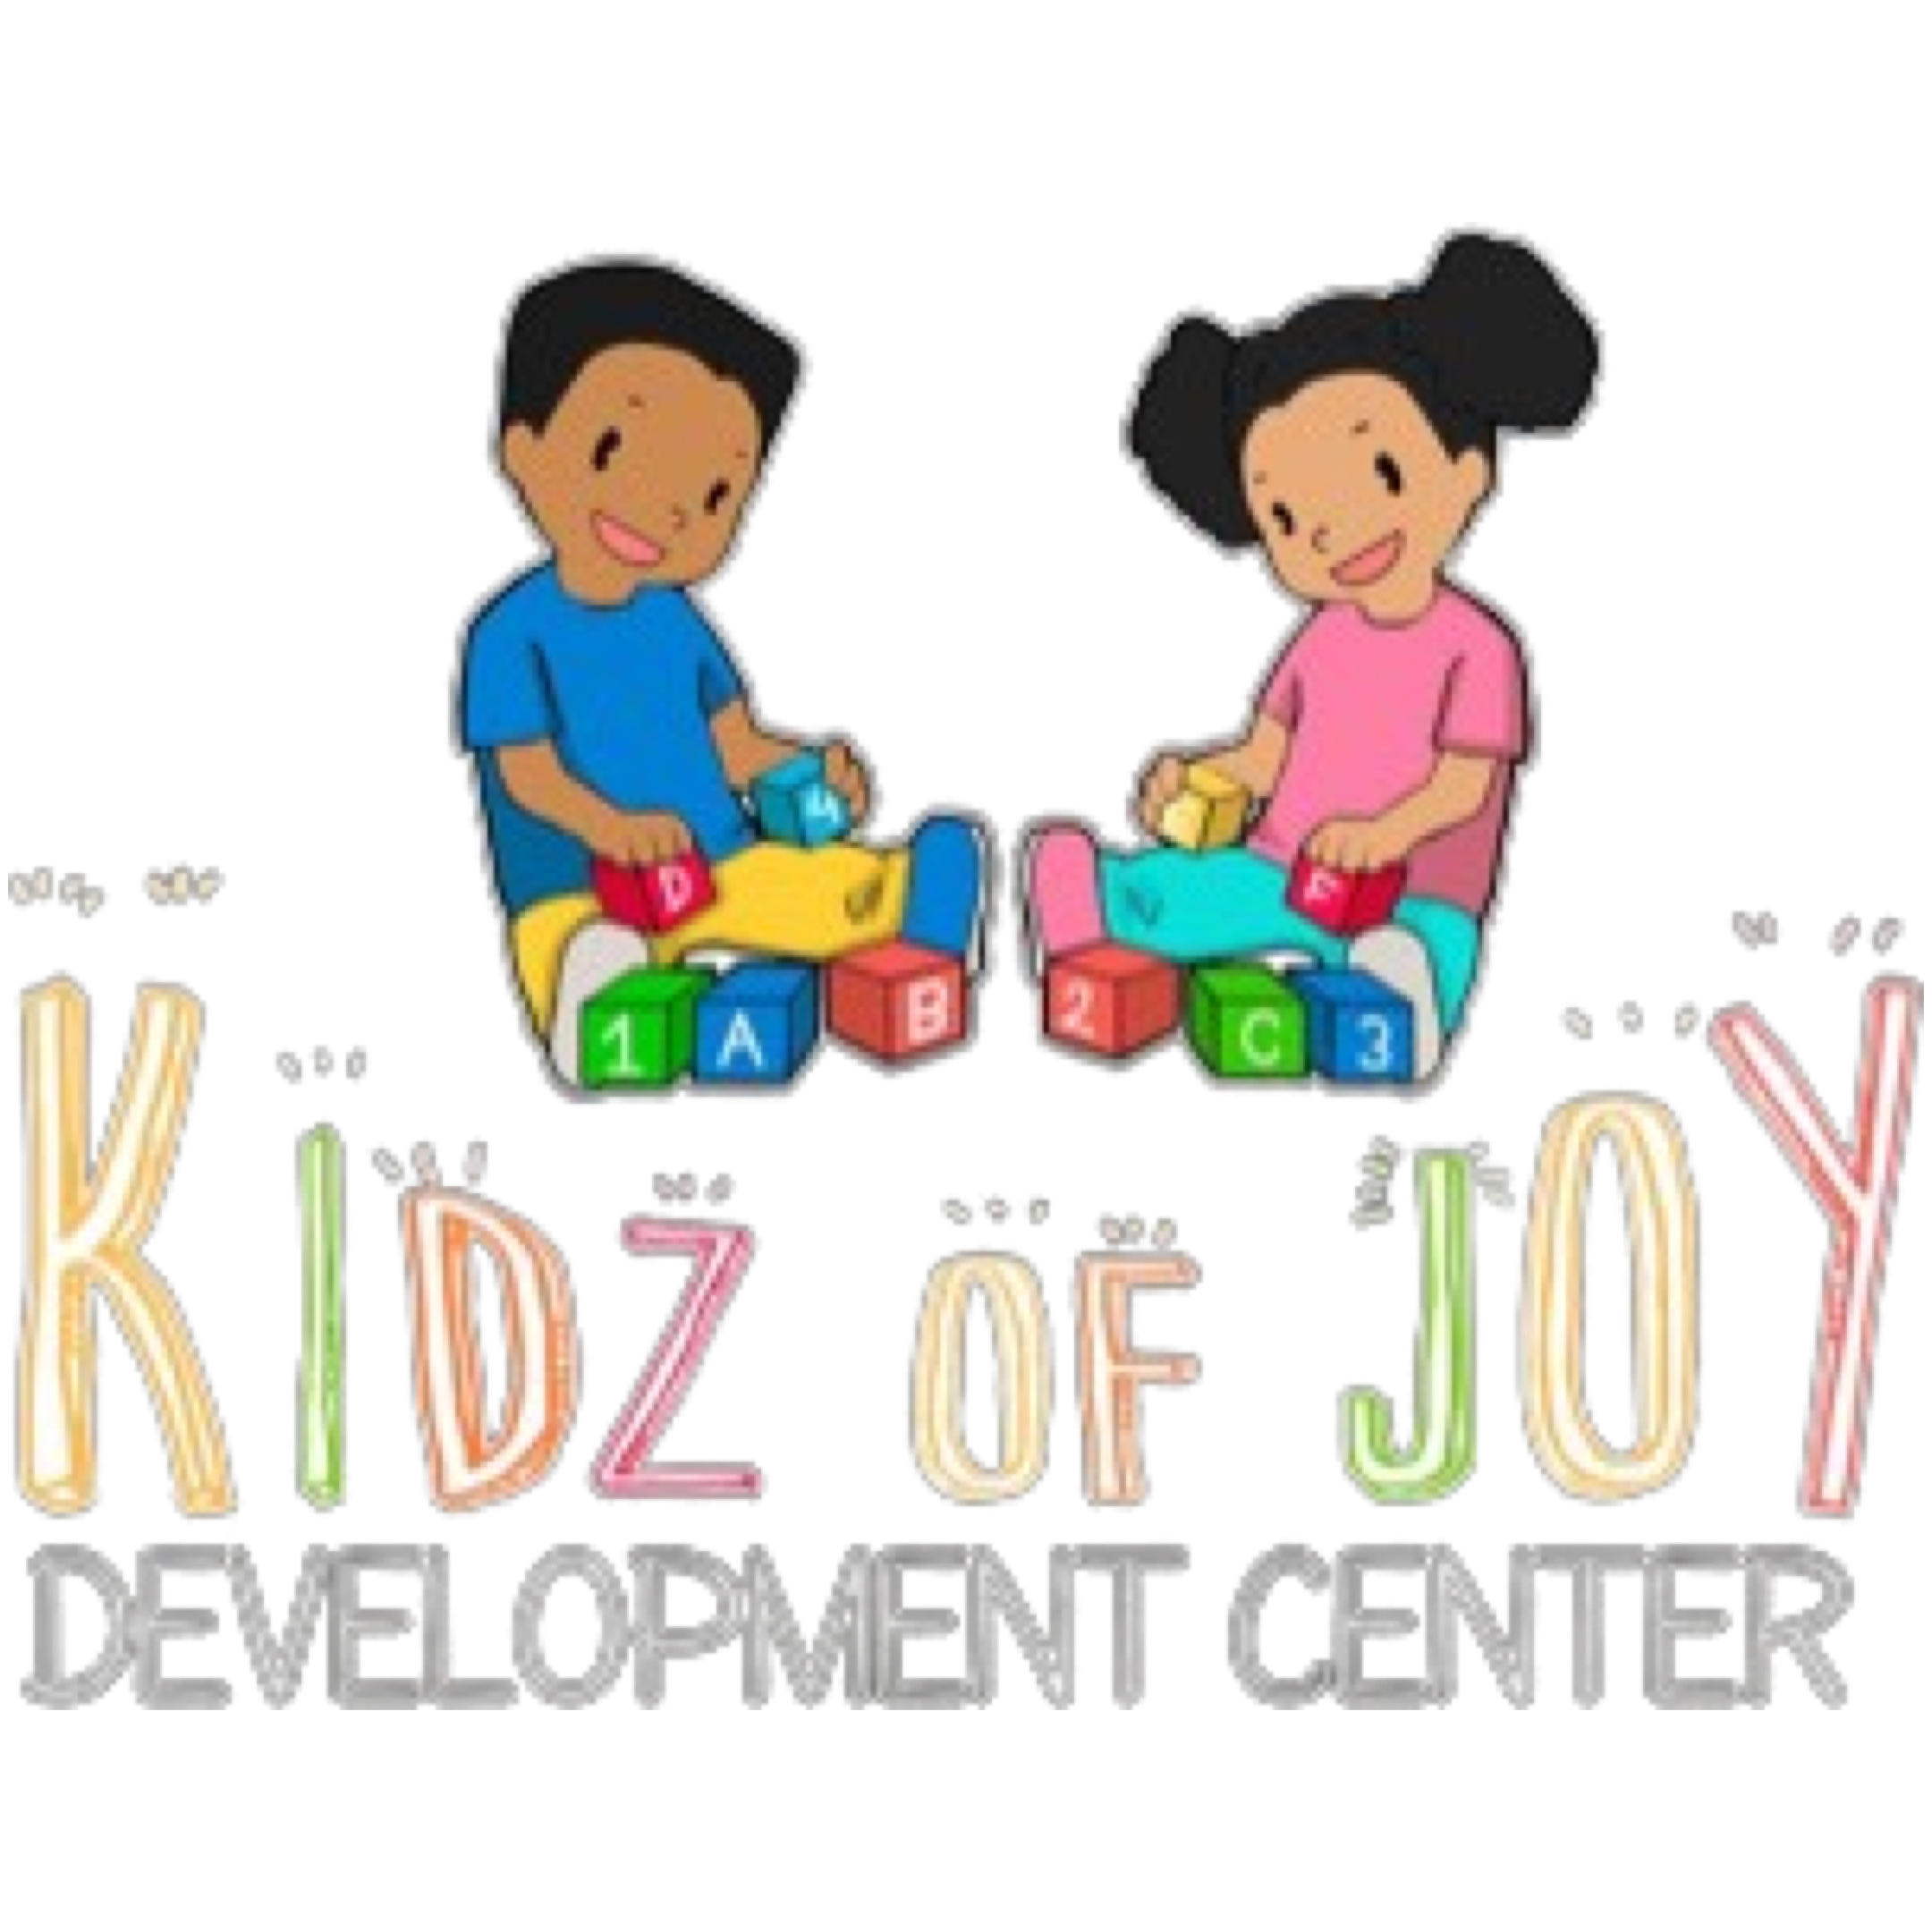 Kidz of Joy Development Center